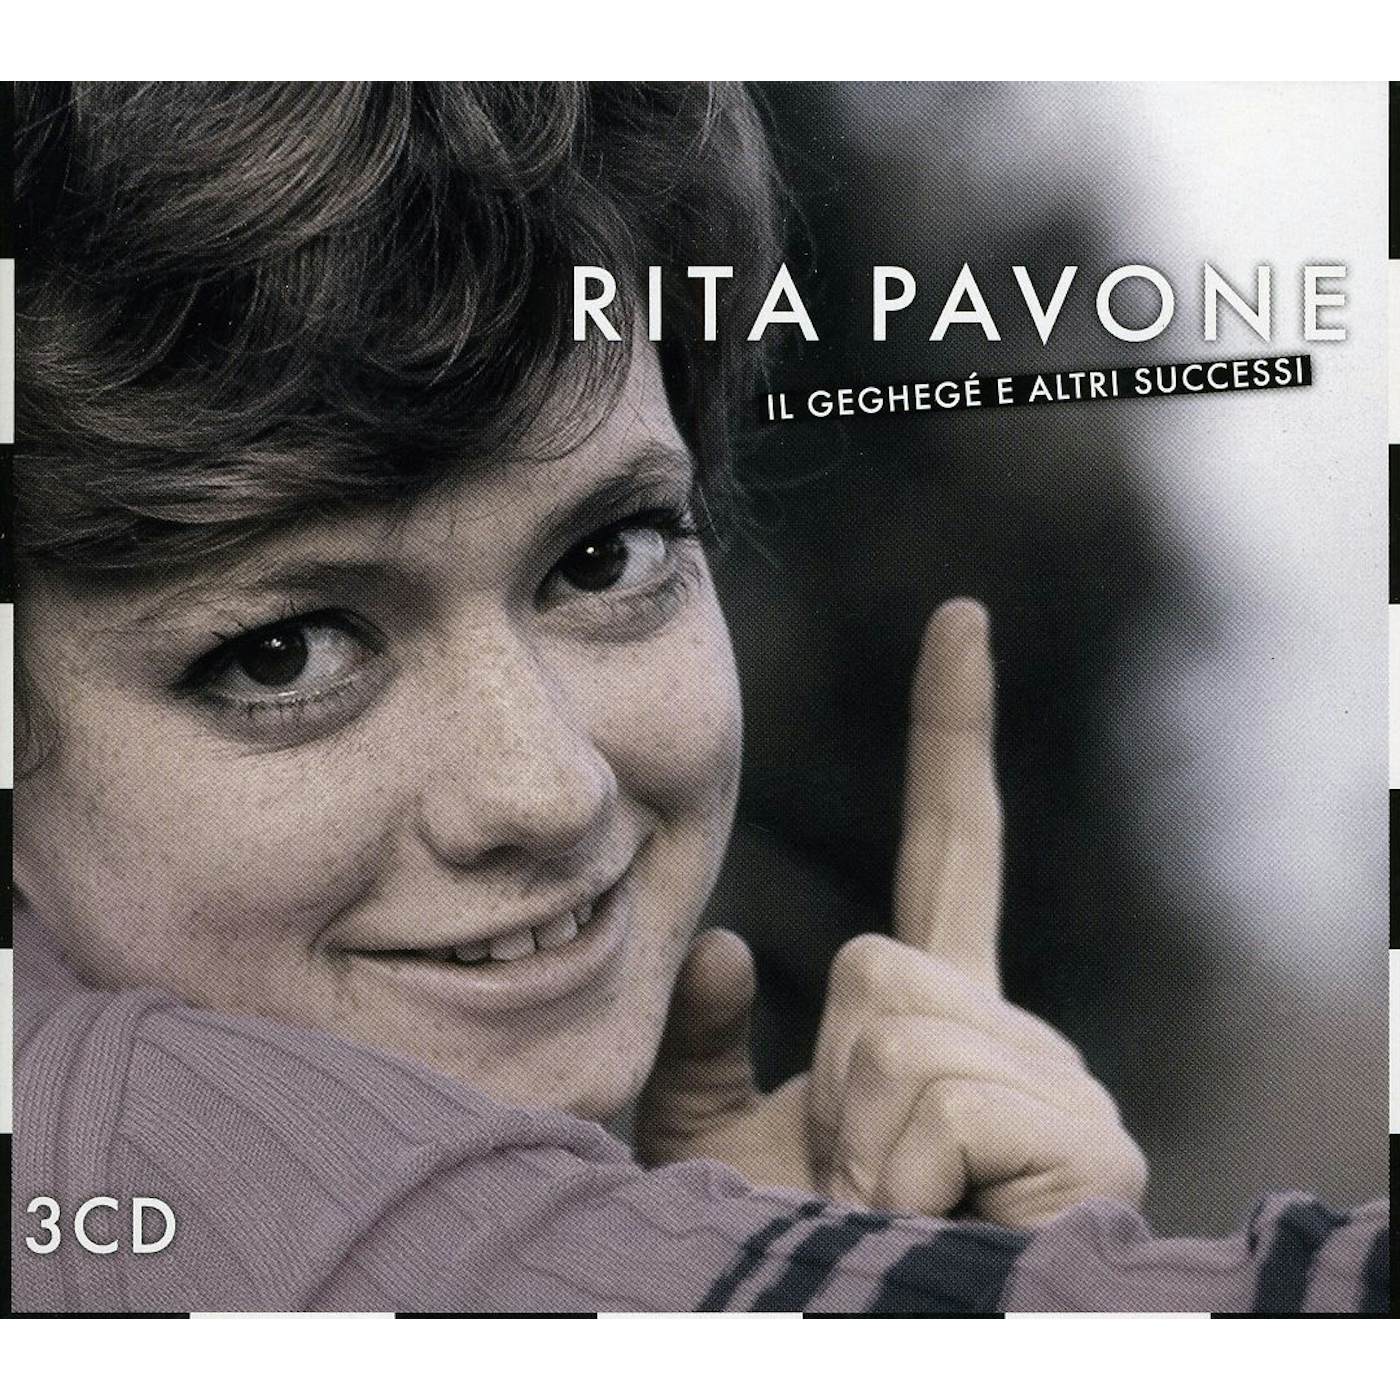 Rita Pavone IL GEGHEGE E ALTRI SUCCESSI CD